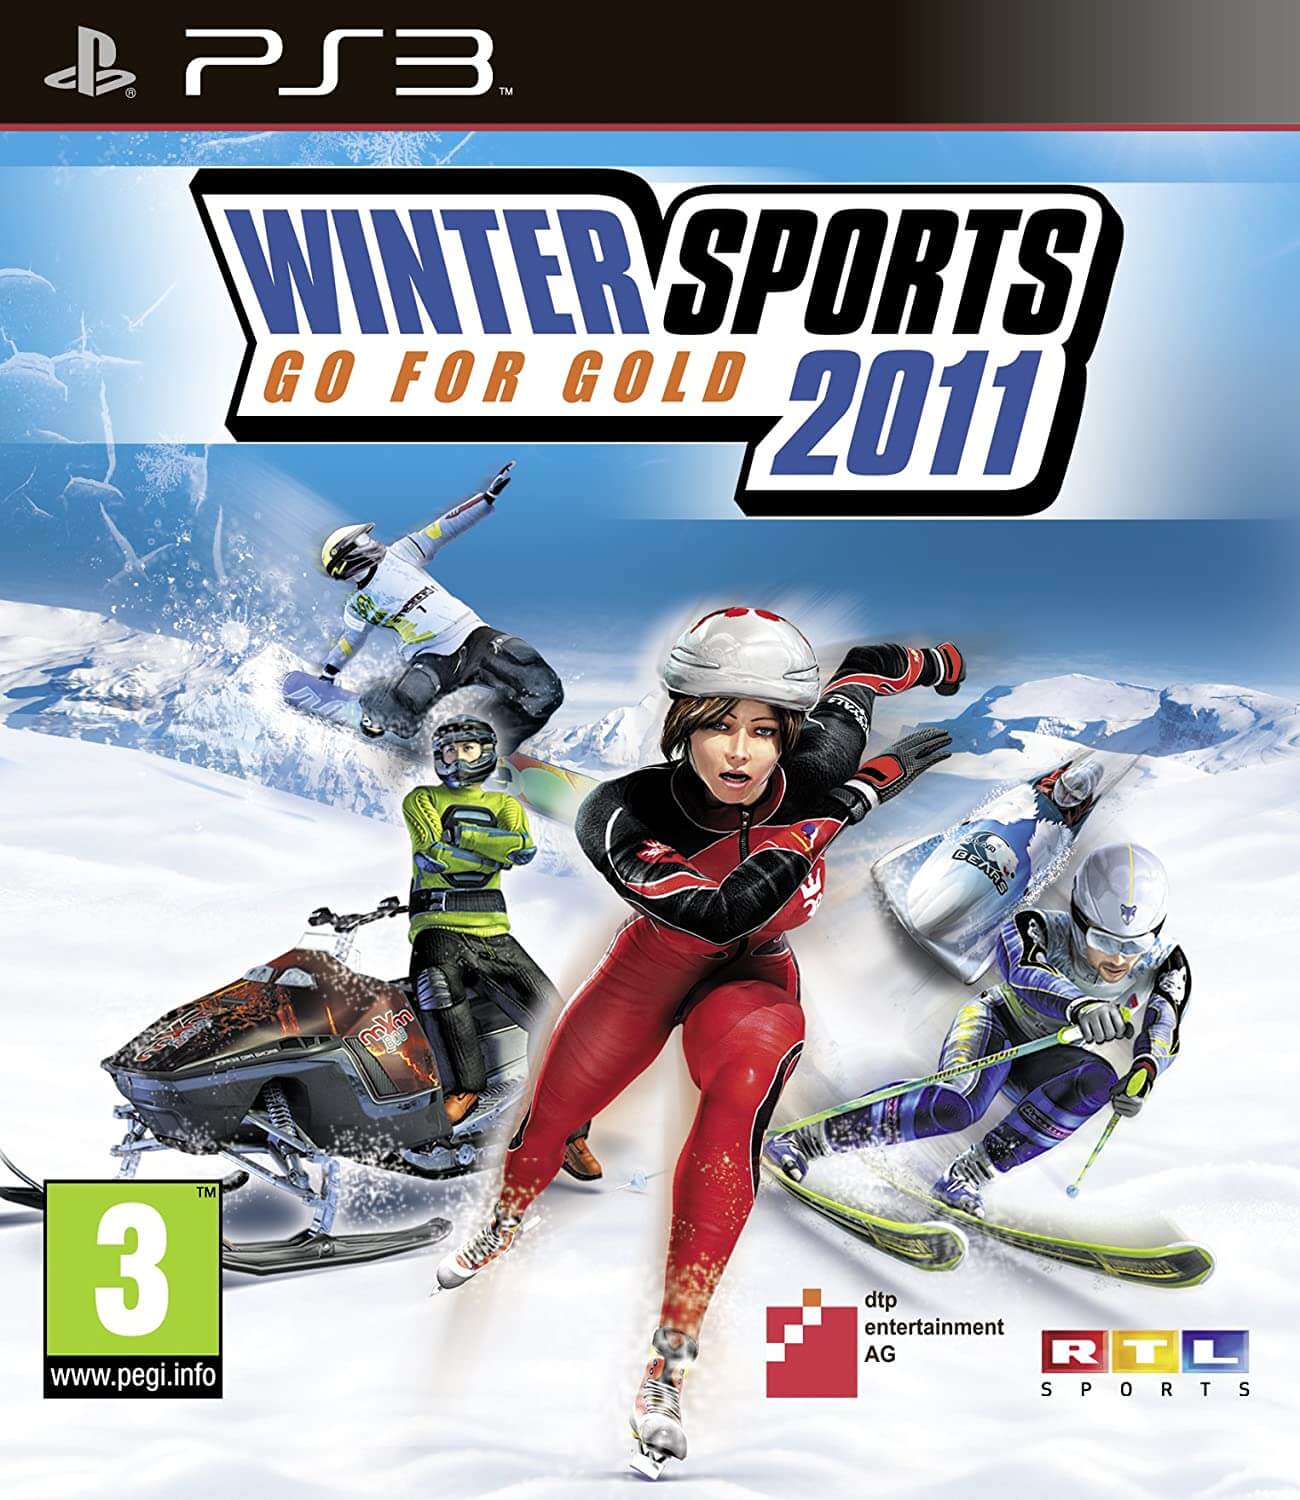 Winter Sports 2011 Go For God